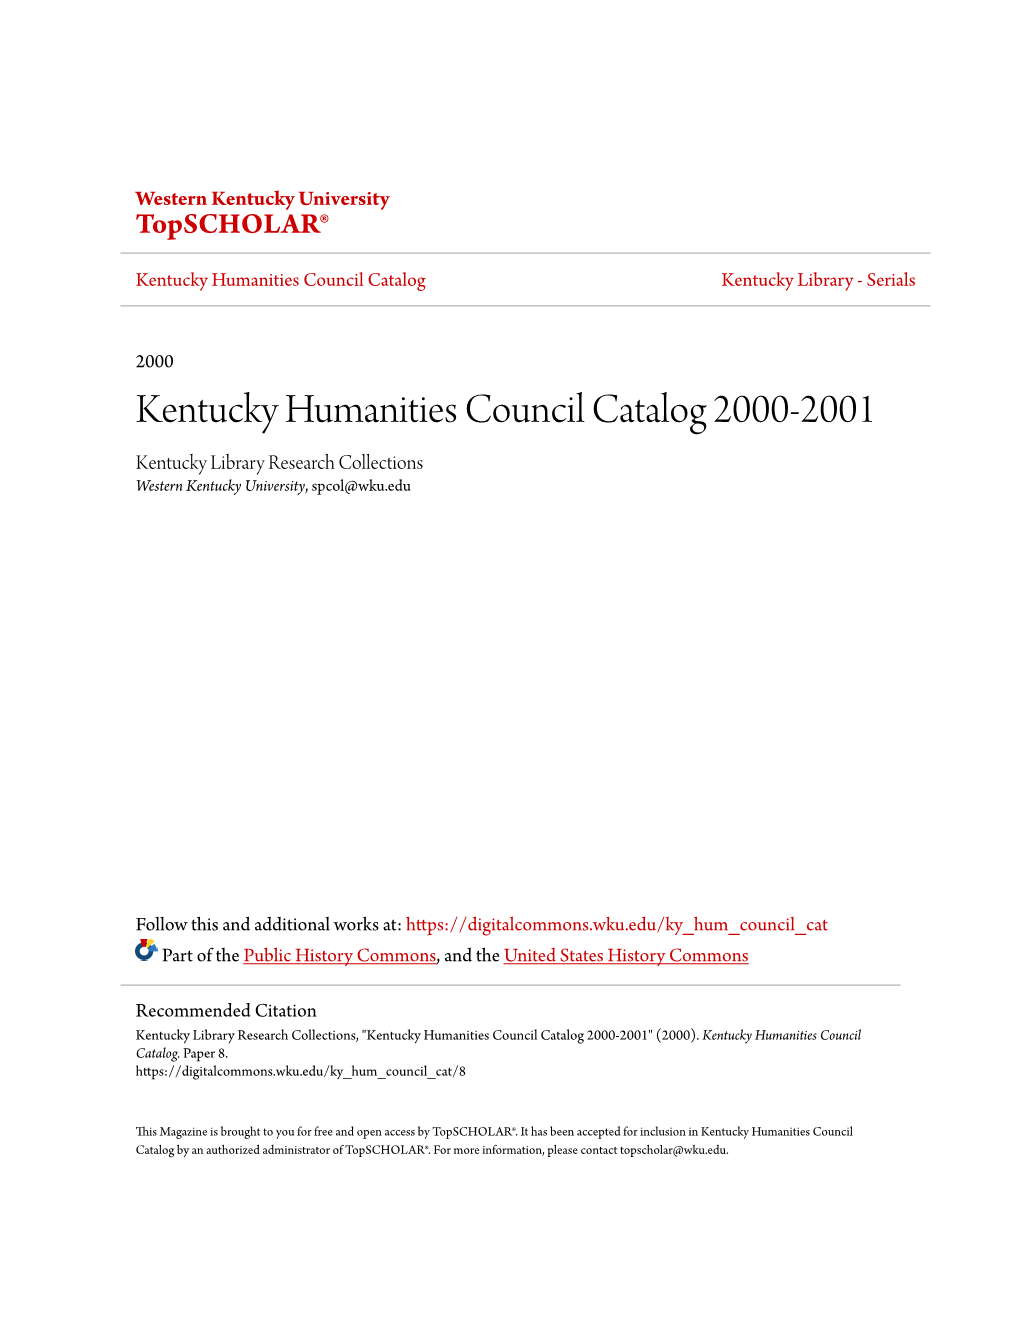 Kentucky Humanities Council Catalog 2000-2001 Kentucky Library Research Collections Western Kentucky University, Spcol@Wku.Edu